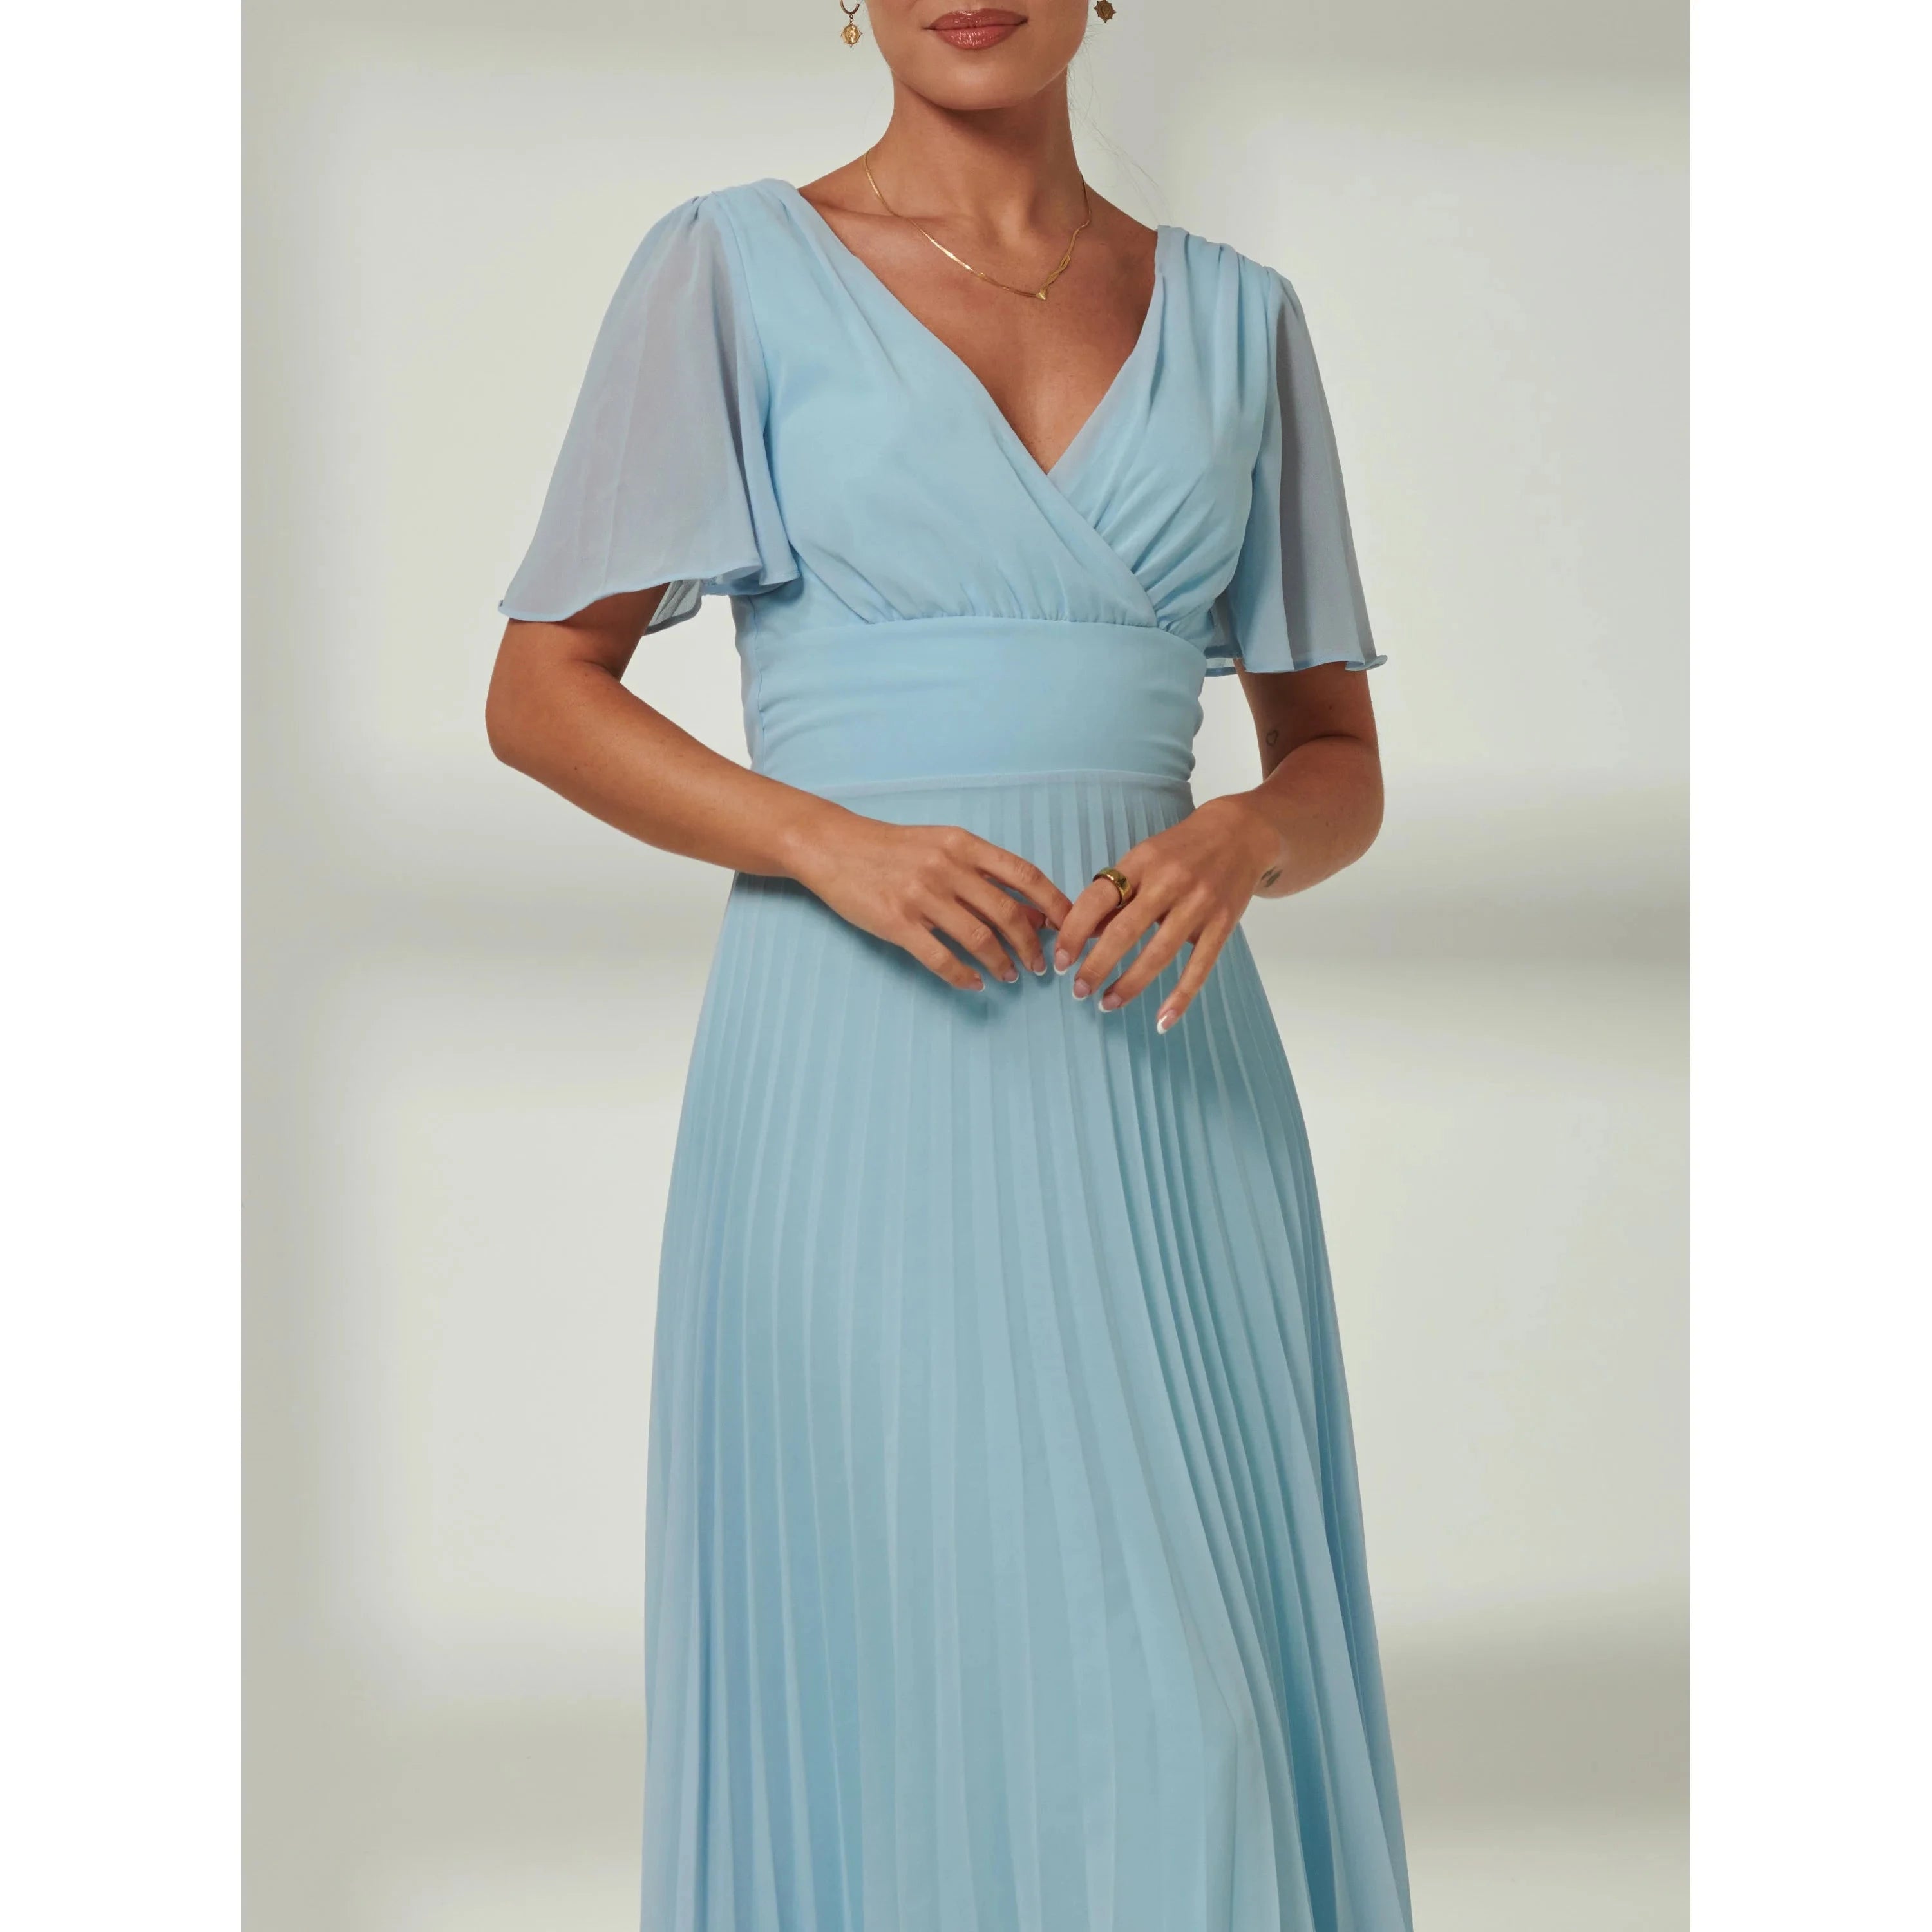 Jolie Moi Light Blue Pleated Chiffon Dress With Angel Sleeves